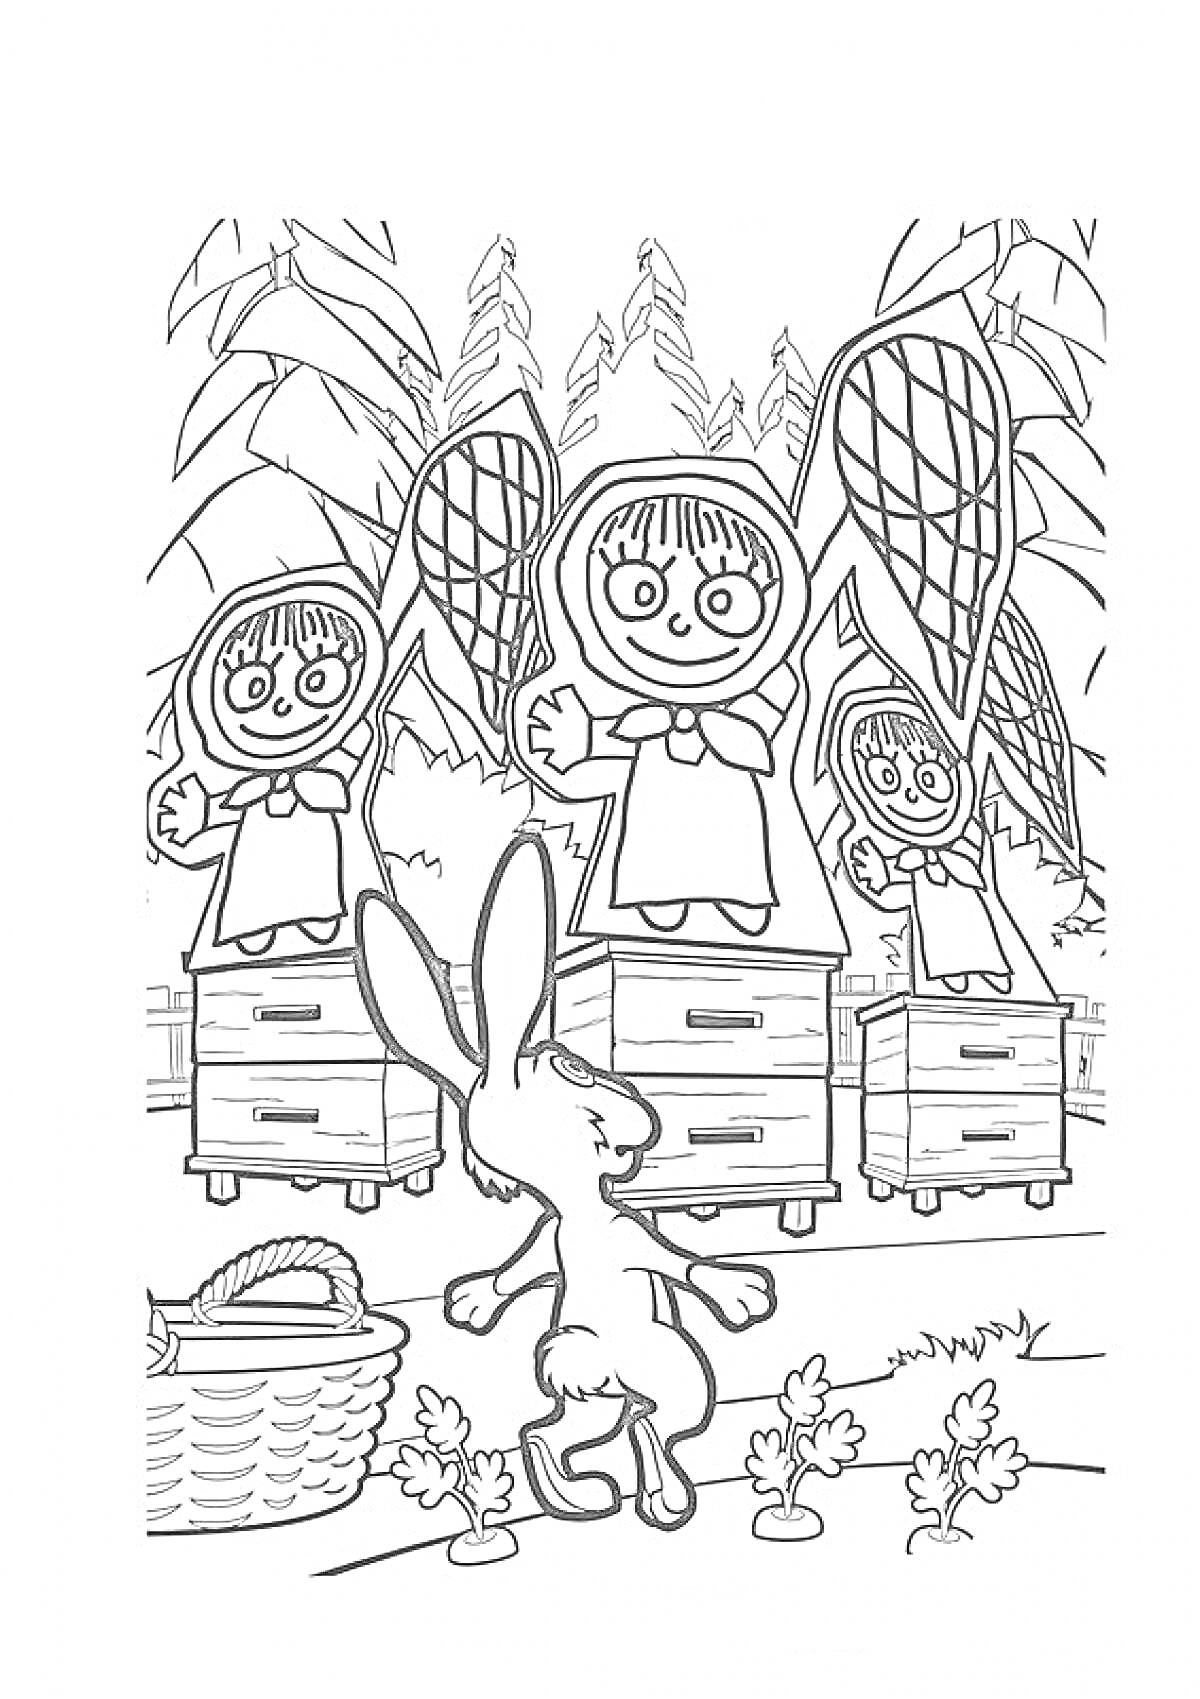 Раскраска Три Маши в шапках-пчелоедах, кролик, корзина, лес, ульи, моркови